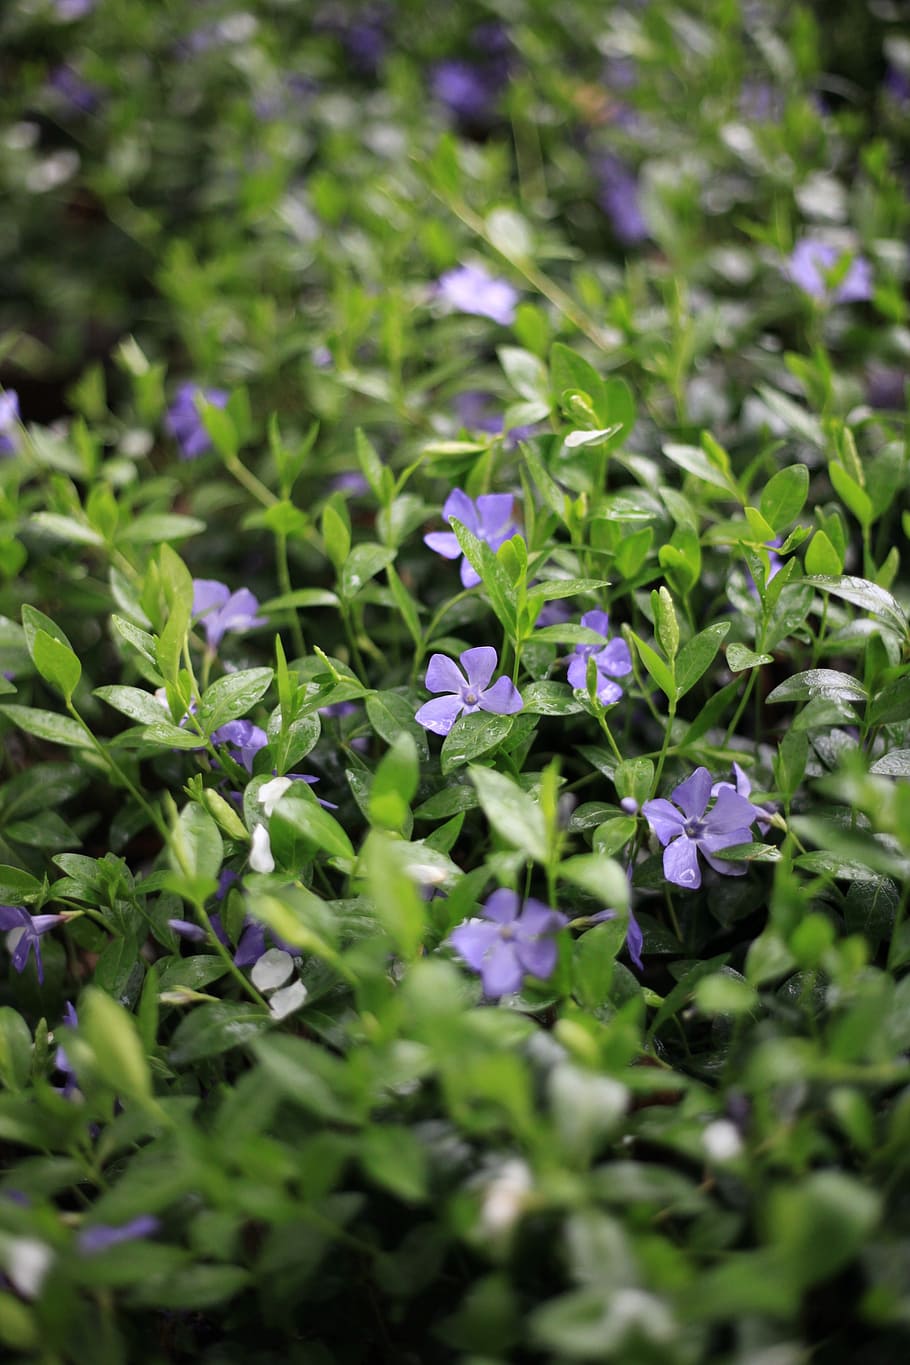 periwinkle, herb, purple, green background, 5 petals, spring, nature, flower, flowering plant, plant